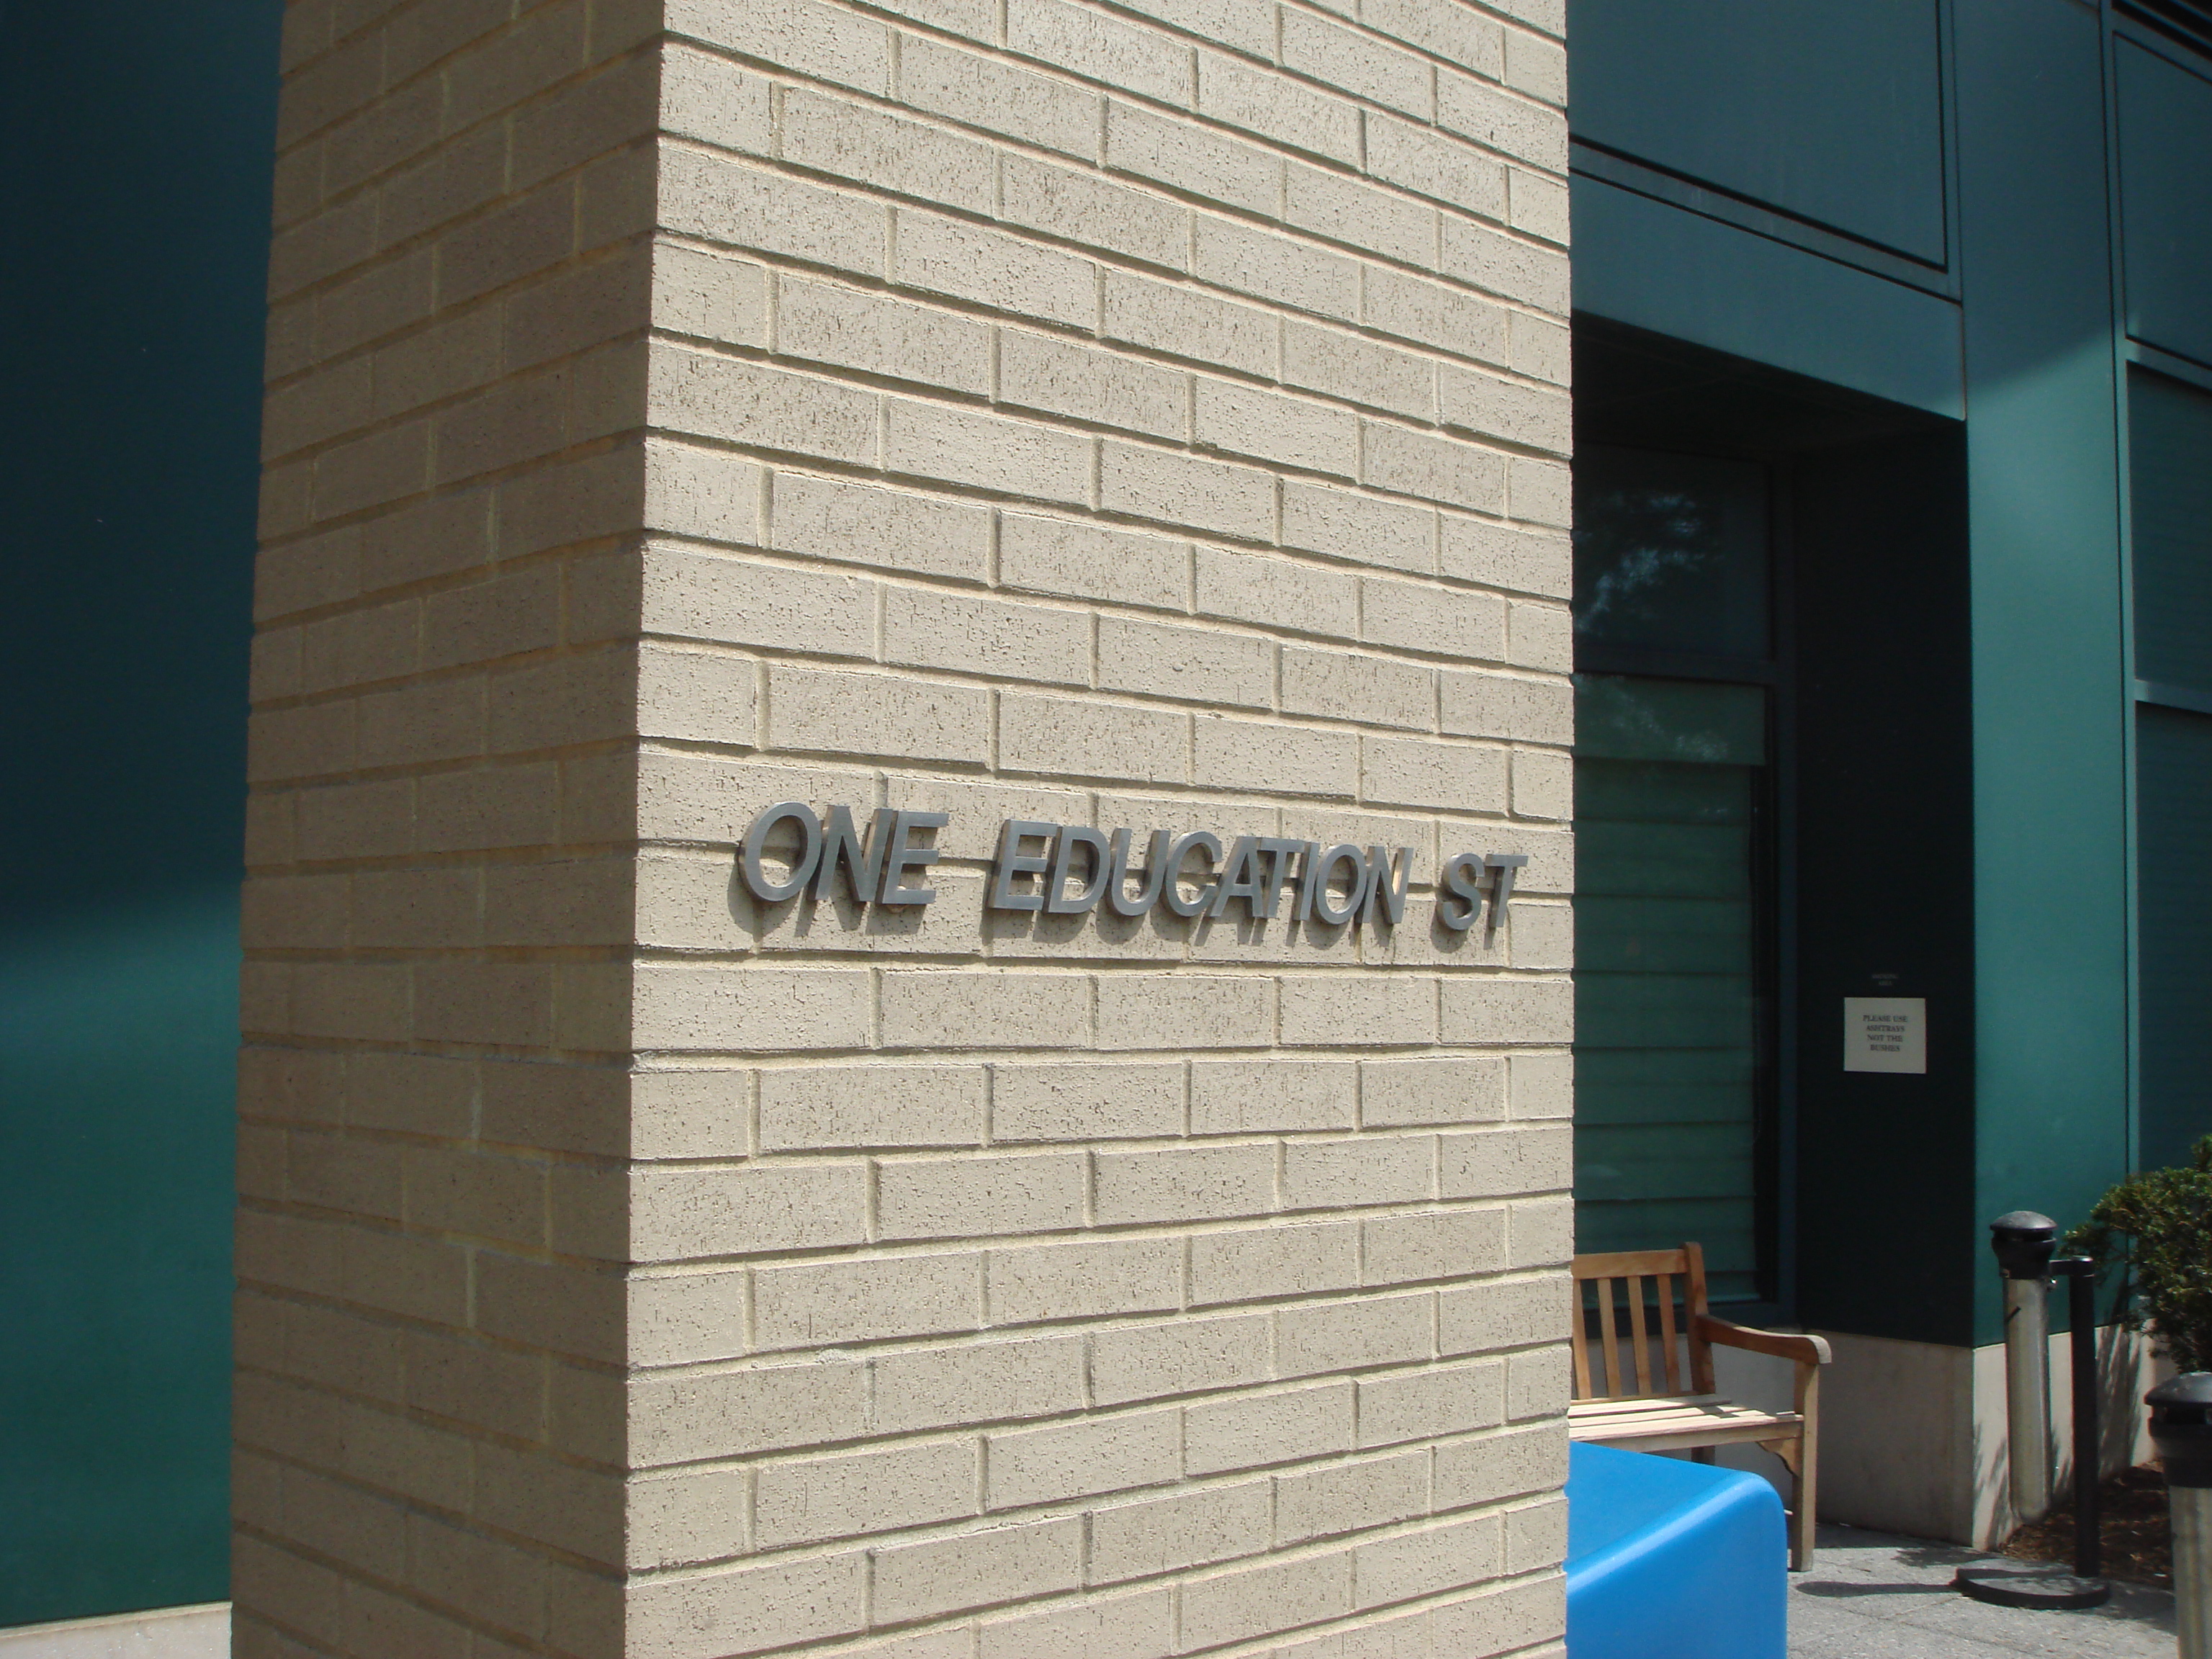 住所表示 One Education Street, Cambridge, MA